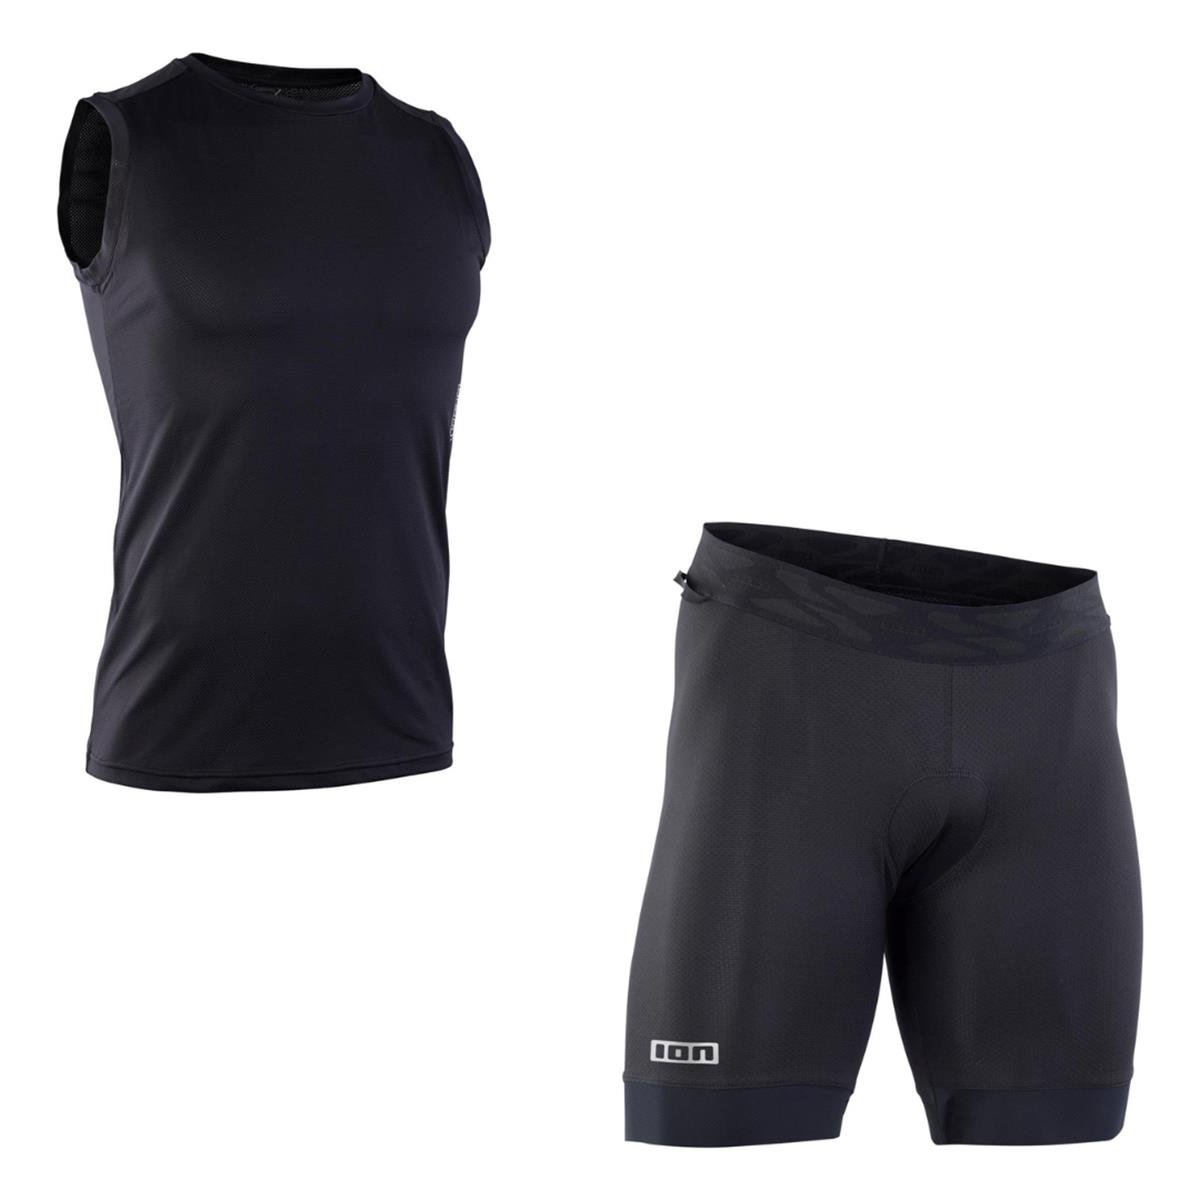 ION MTB underwear set Baselayer / Baselayer Plus Set: 2 pieces, sleeveless, Black